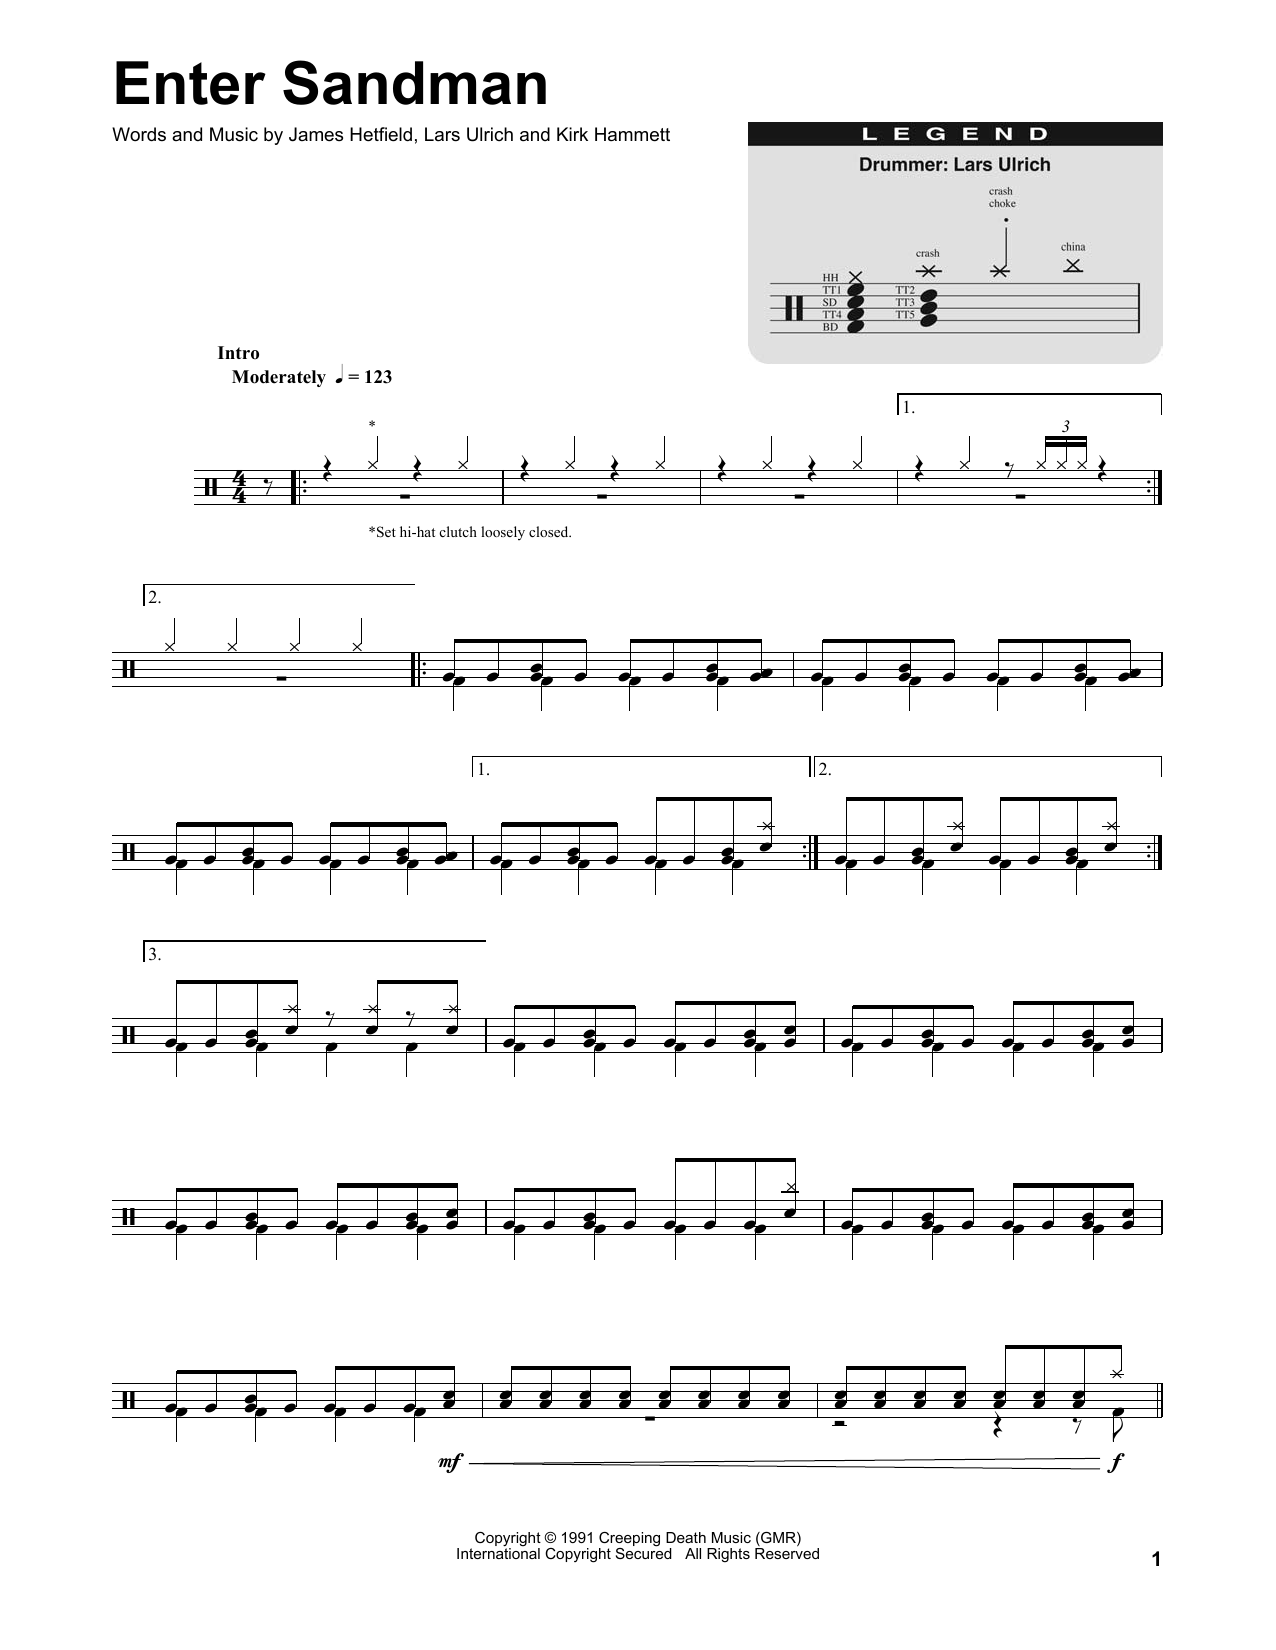 Minimer ophøre Mellemøsten Metallica "Enter Sandman" Sheet Music Notes | Download Printable PDF Score  41520